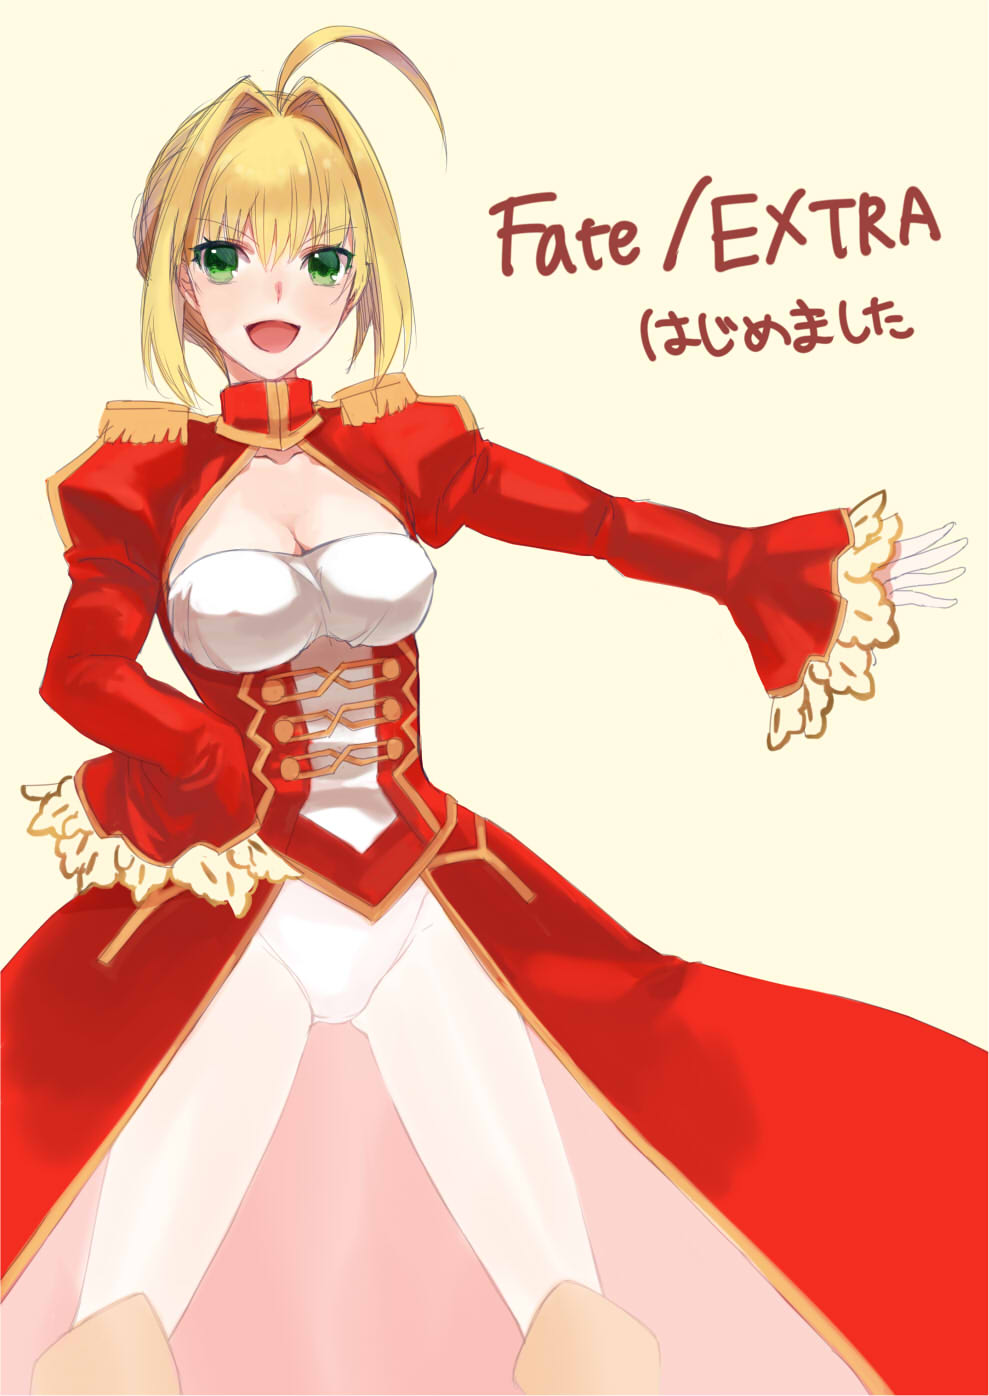 Anime 989x1396 anime anime girls Fate series Fate/Extra Fate/Extra CCC Fate/Grand Order Nero Claudius blonde long hair artwork digital art fan art